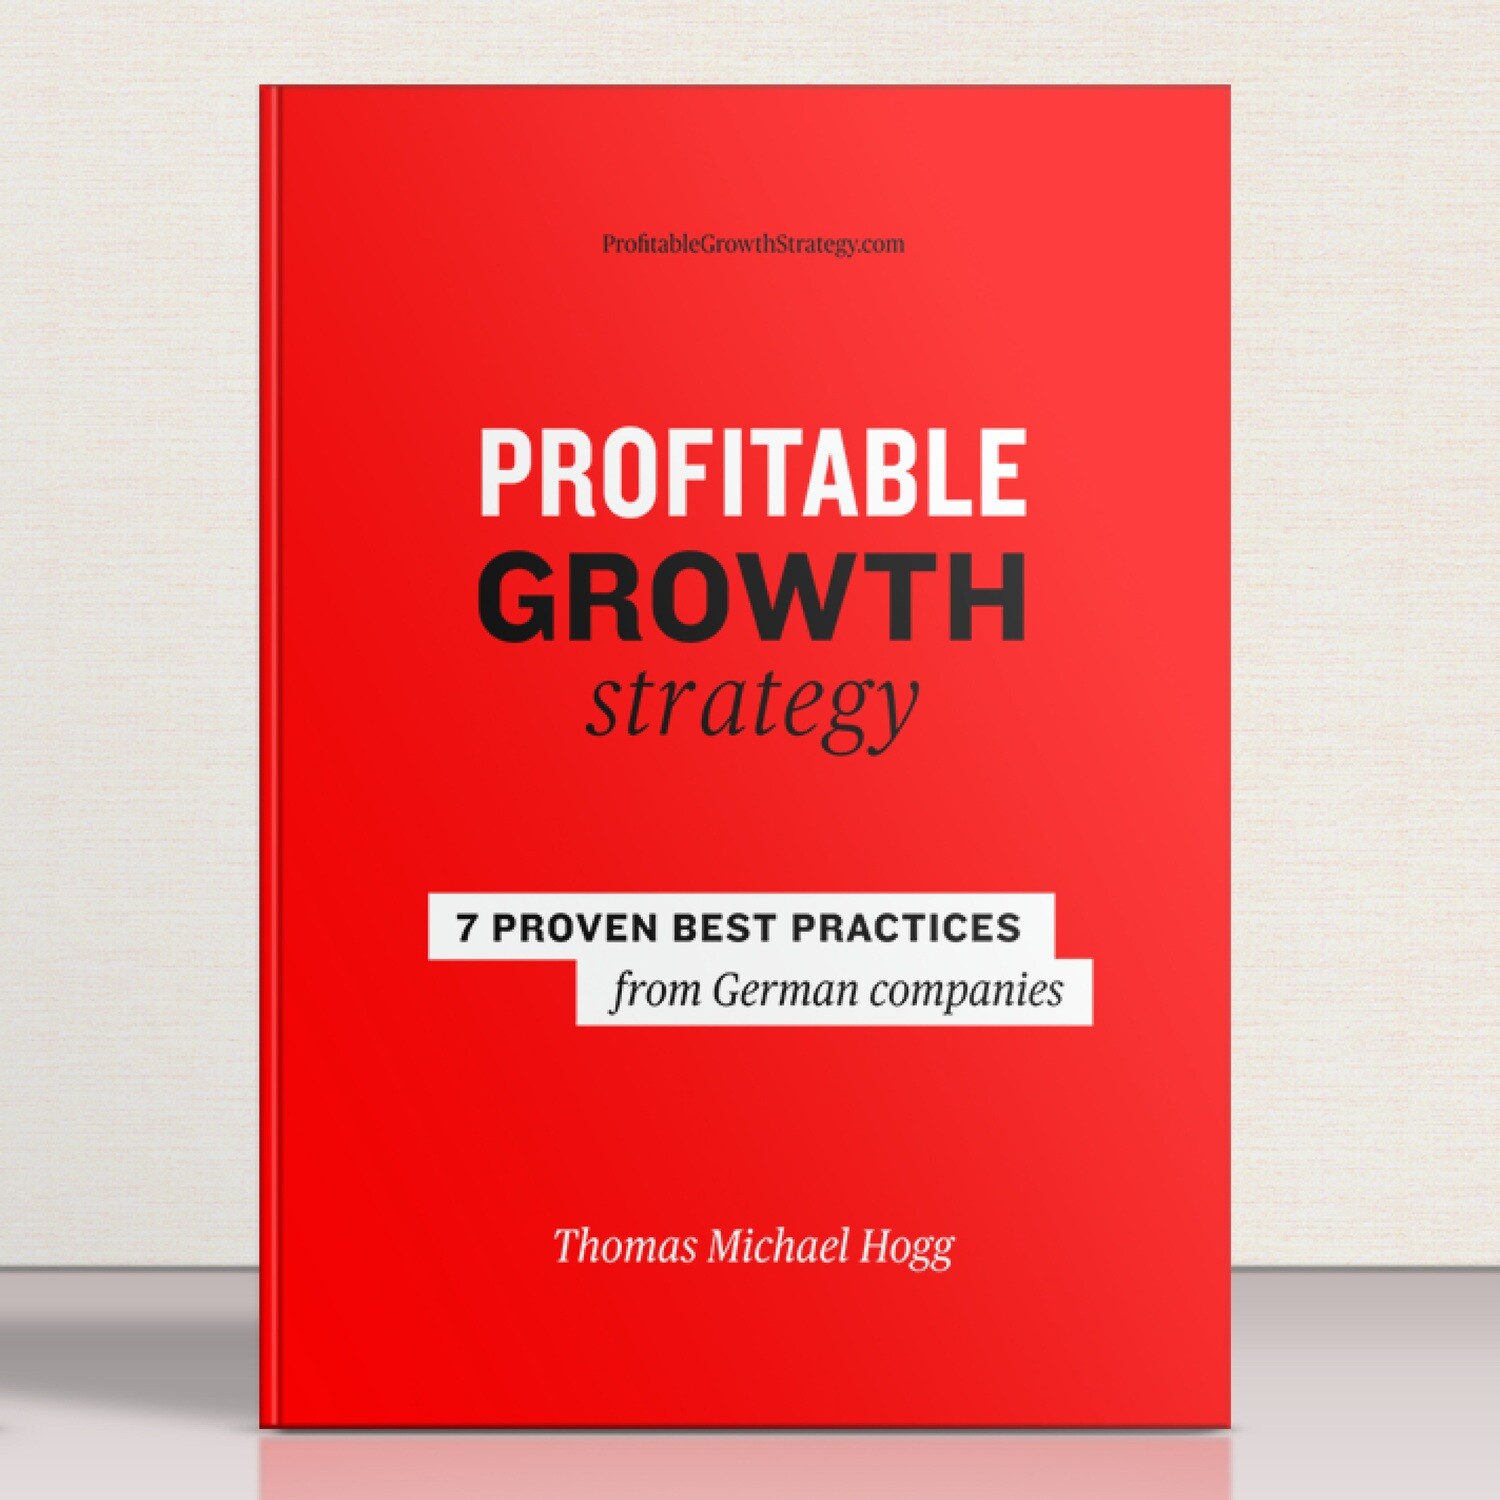 Profitable Growth Strategy. Book by Thomas Hogg on Amazon